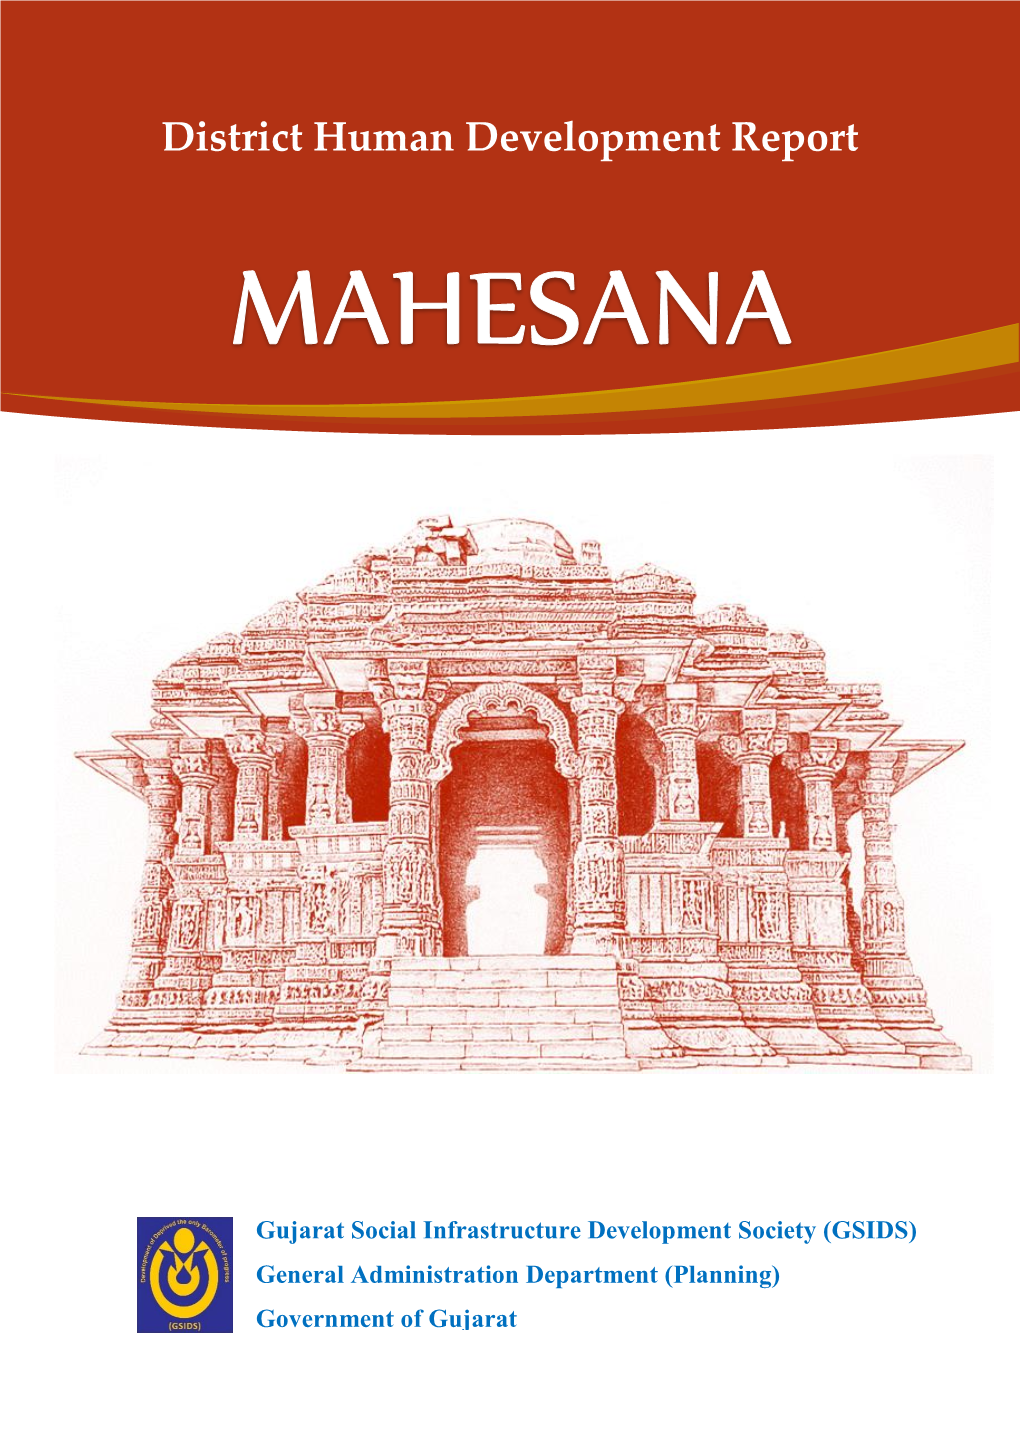 District Human Development Report of Mahesana